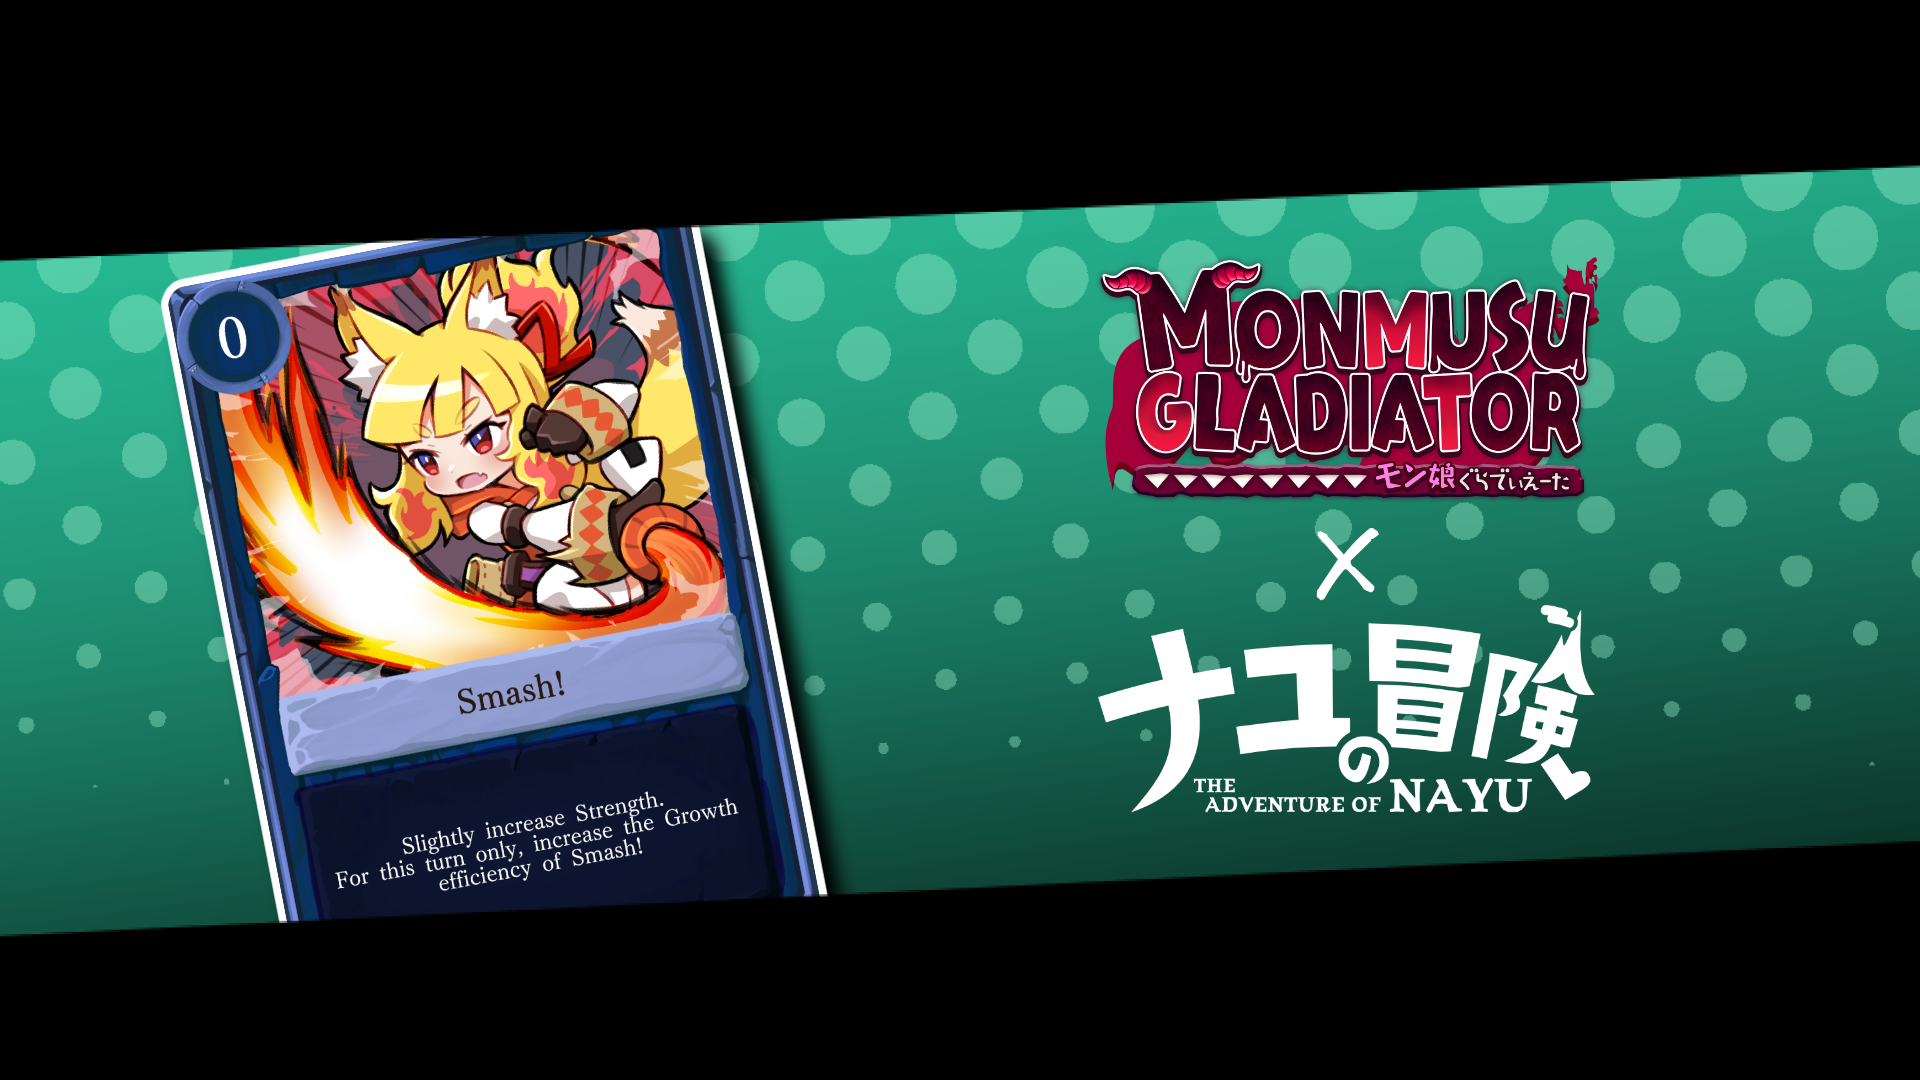 instal the new for apple Monmusu Gladiator